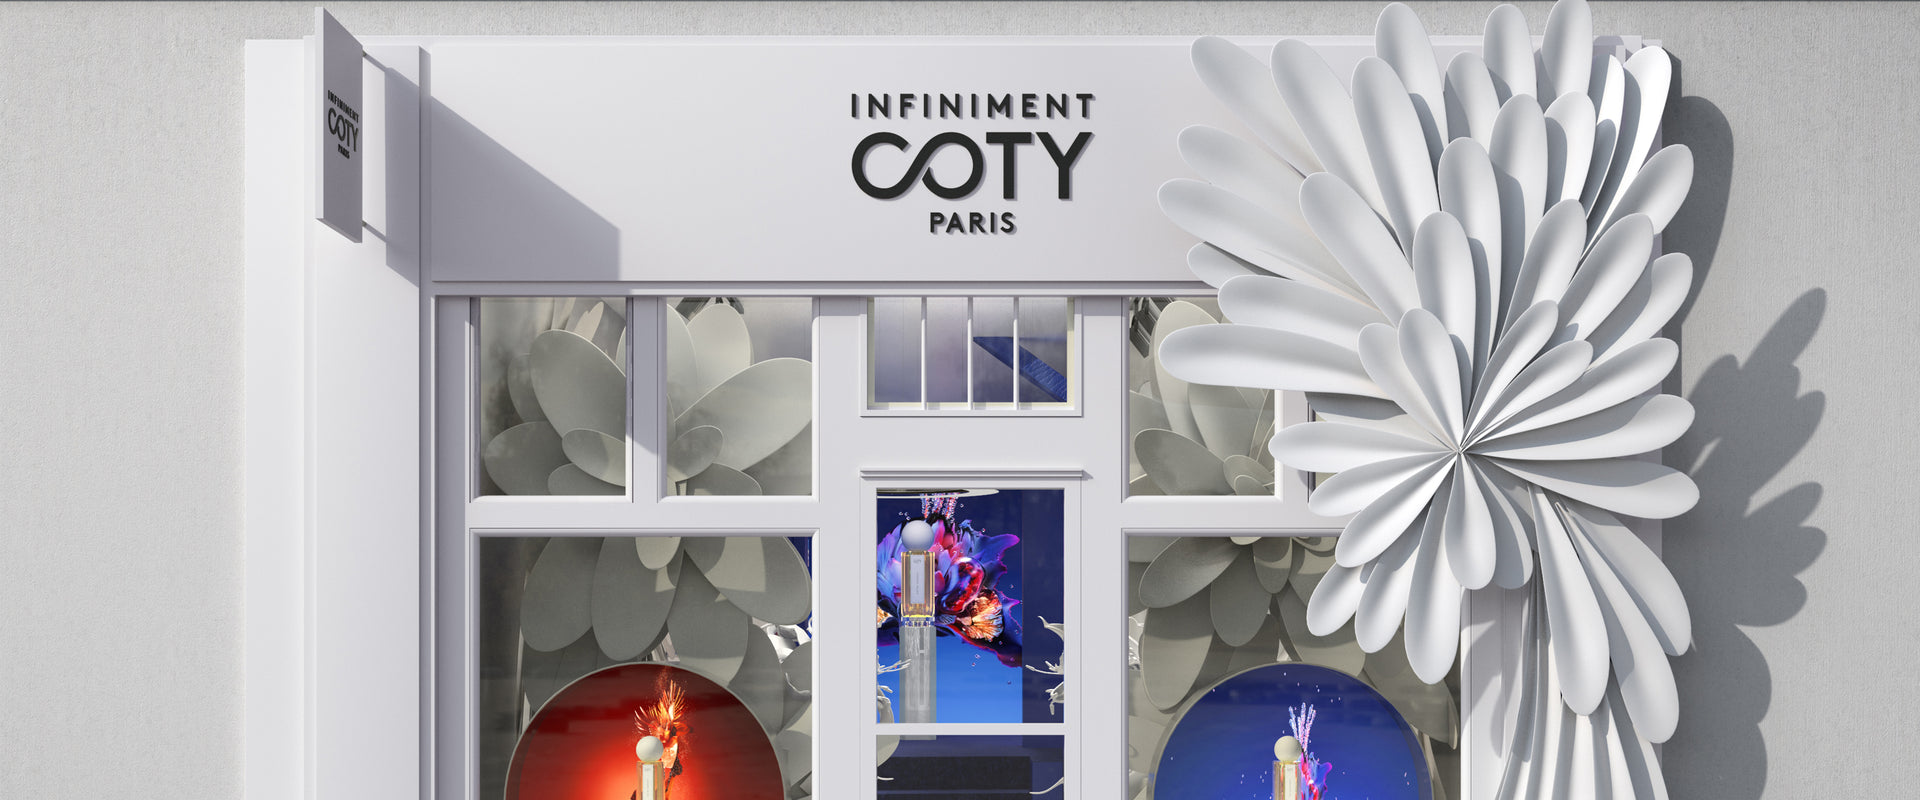 Infiniment Coty Paris Paris pop up store digital representation